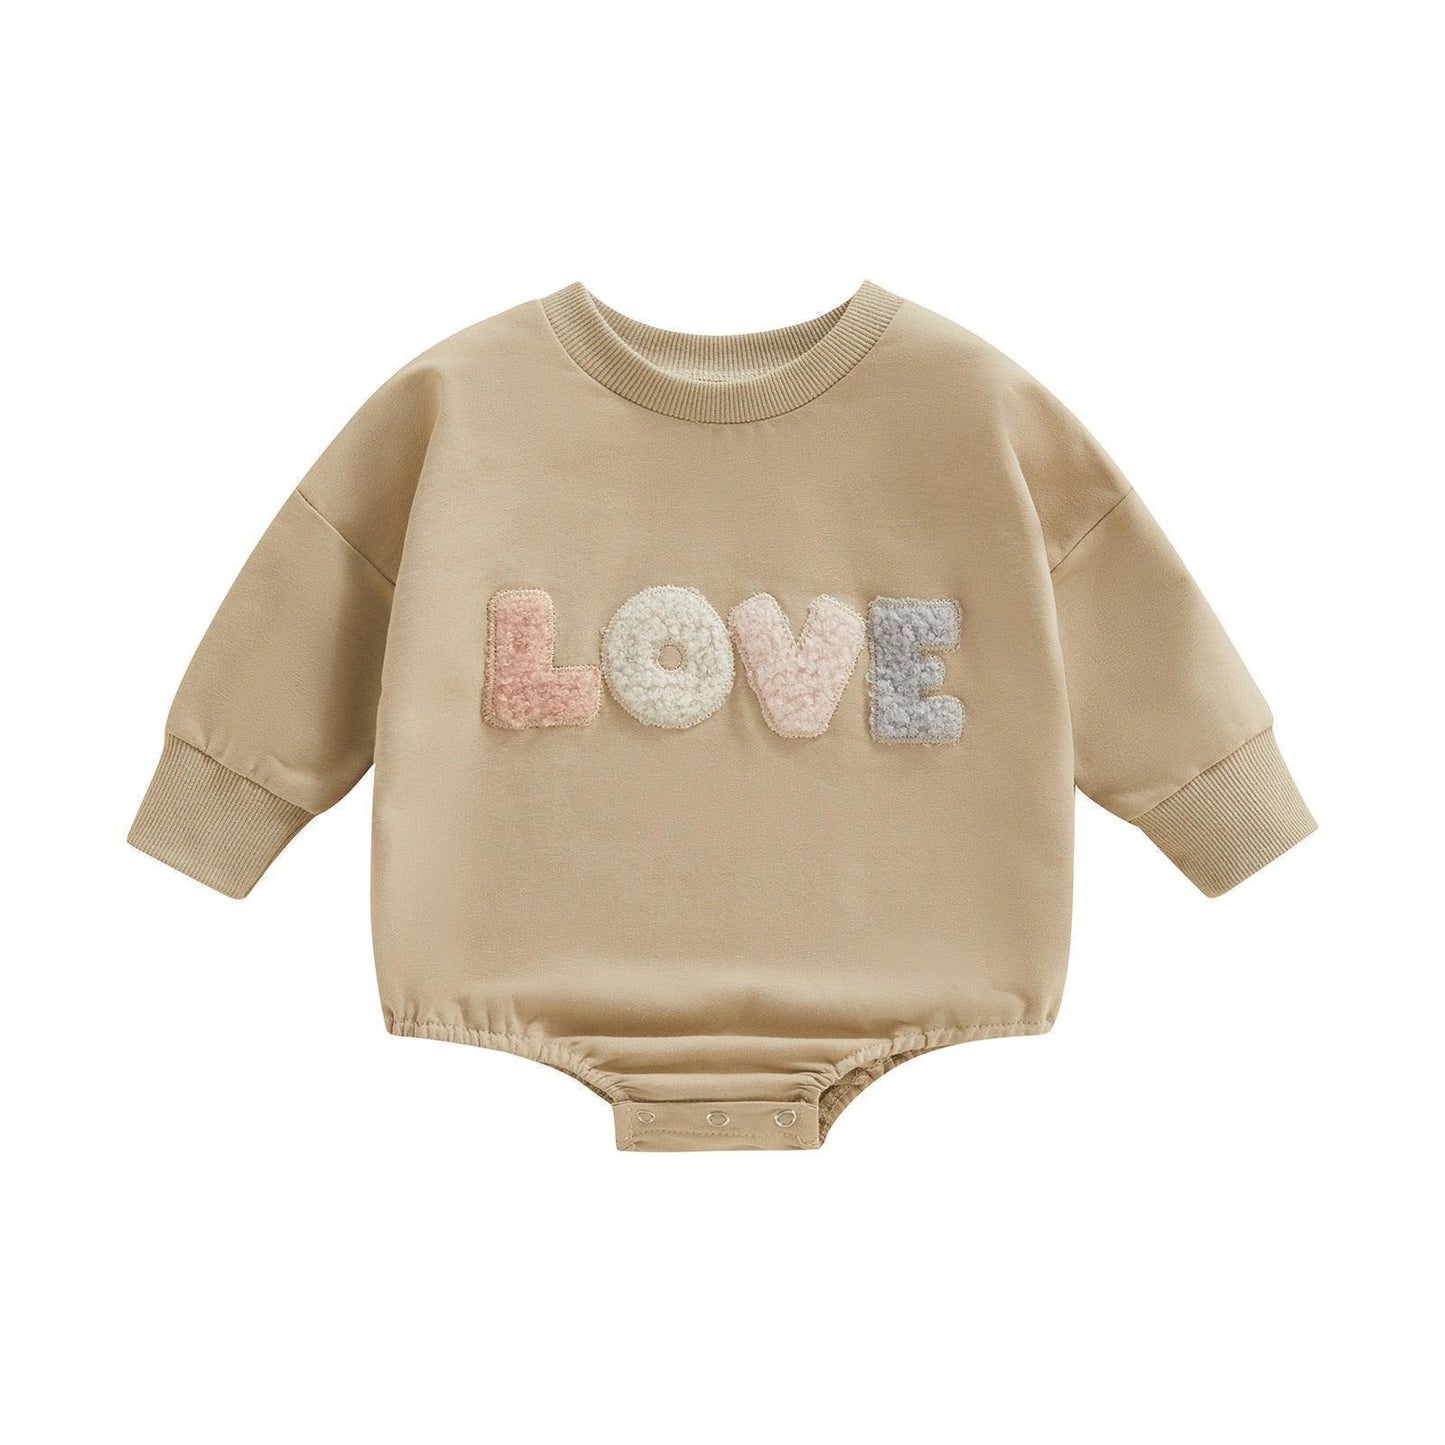 Fuzzy Love Romper - Shop Baby Boutiques 